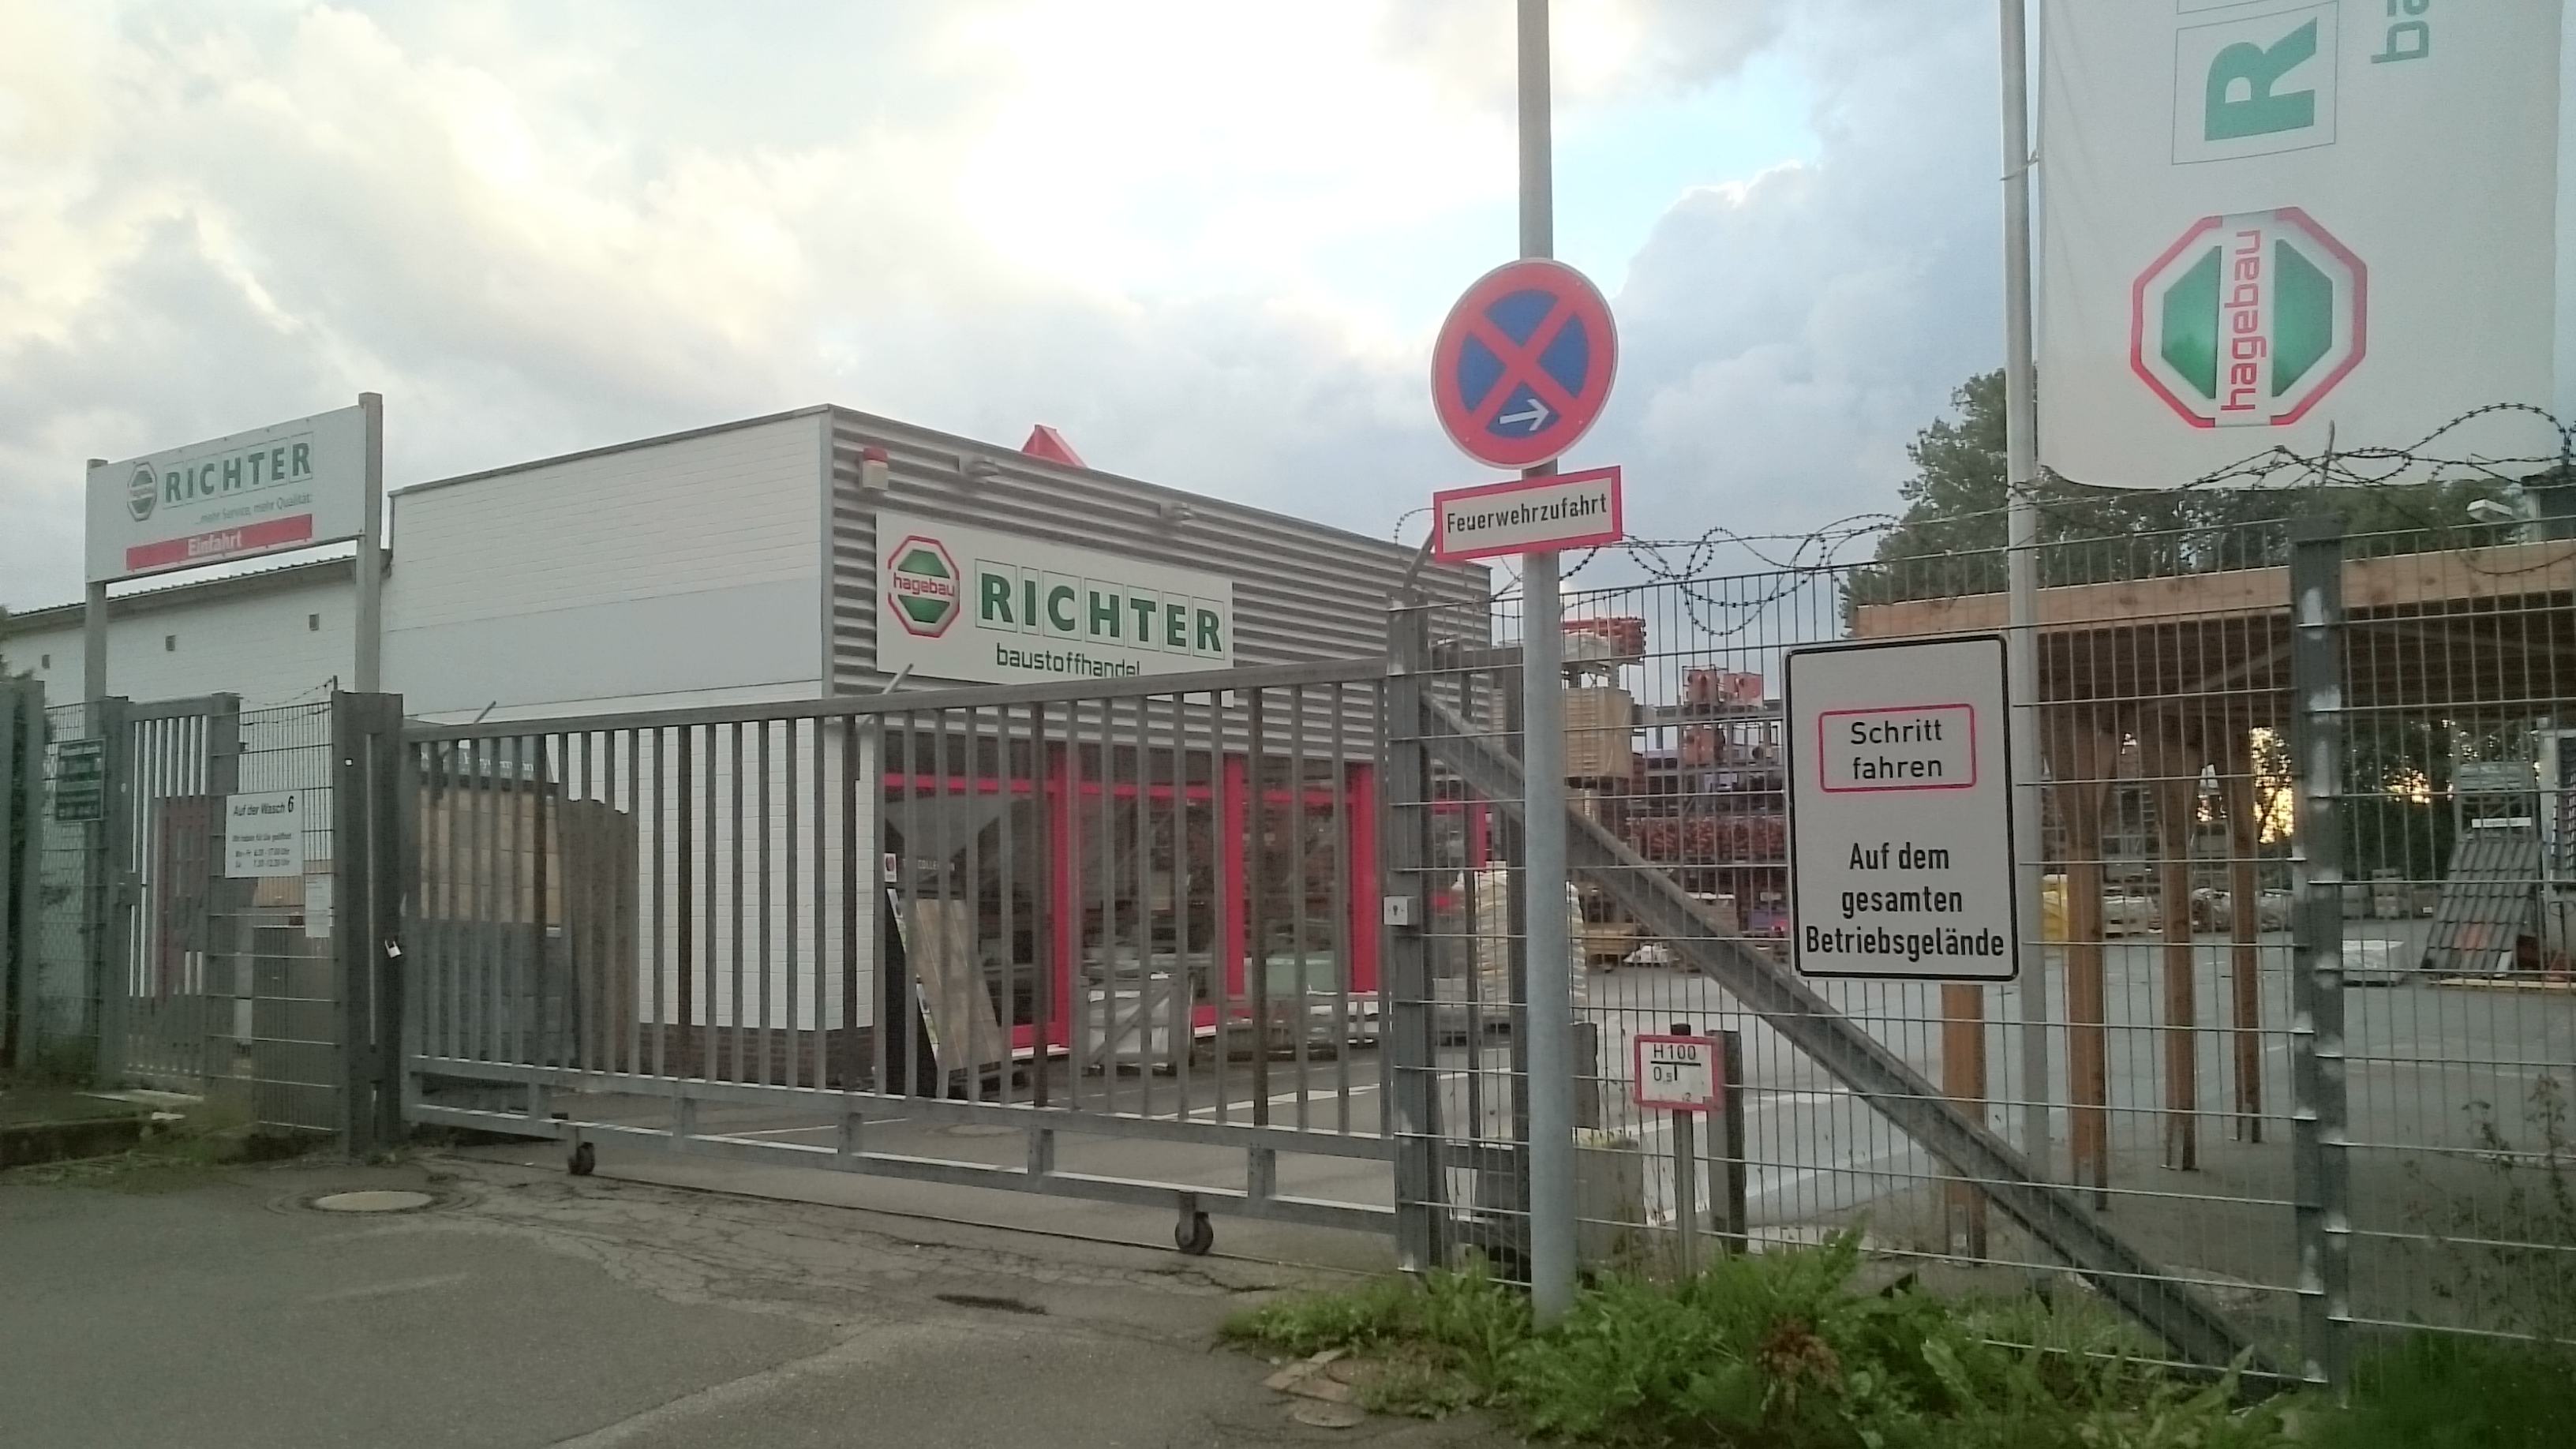 Richter Baustoffe GmbH & Co. KGaA in 23611 Bad Schwartau